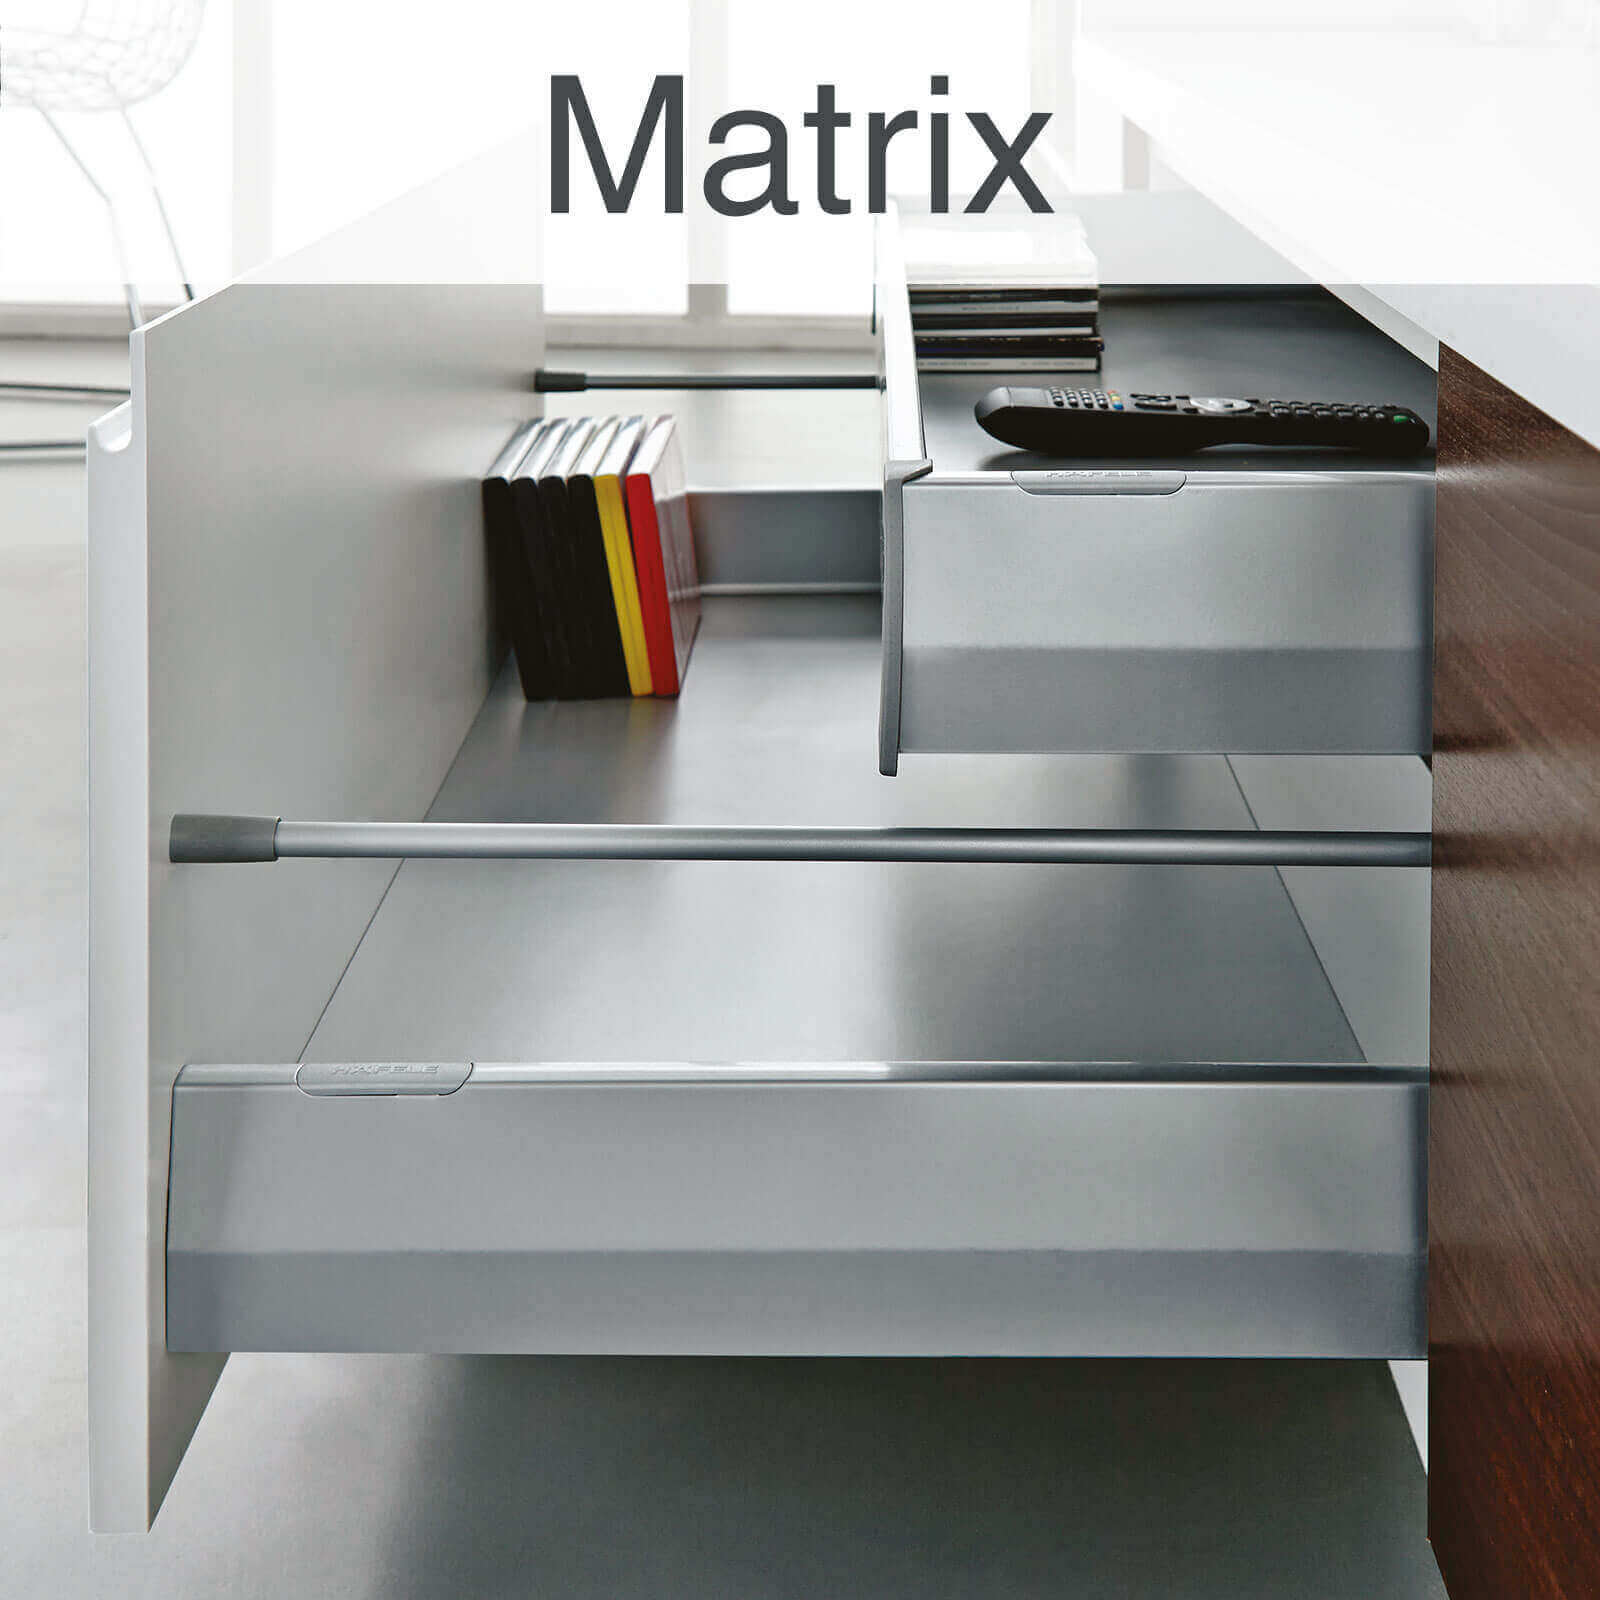 Matrix drawers